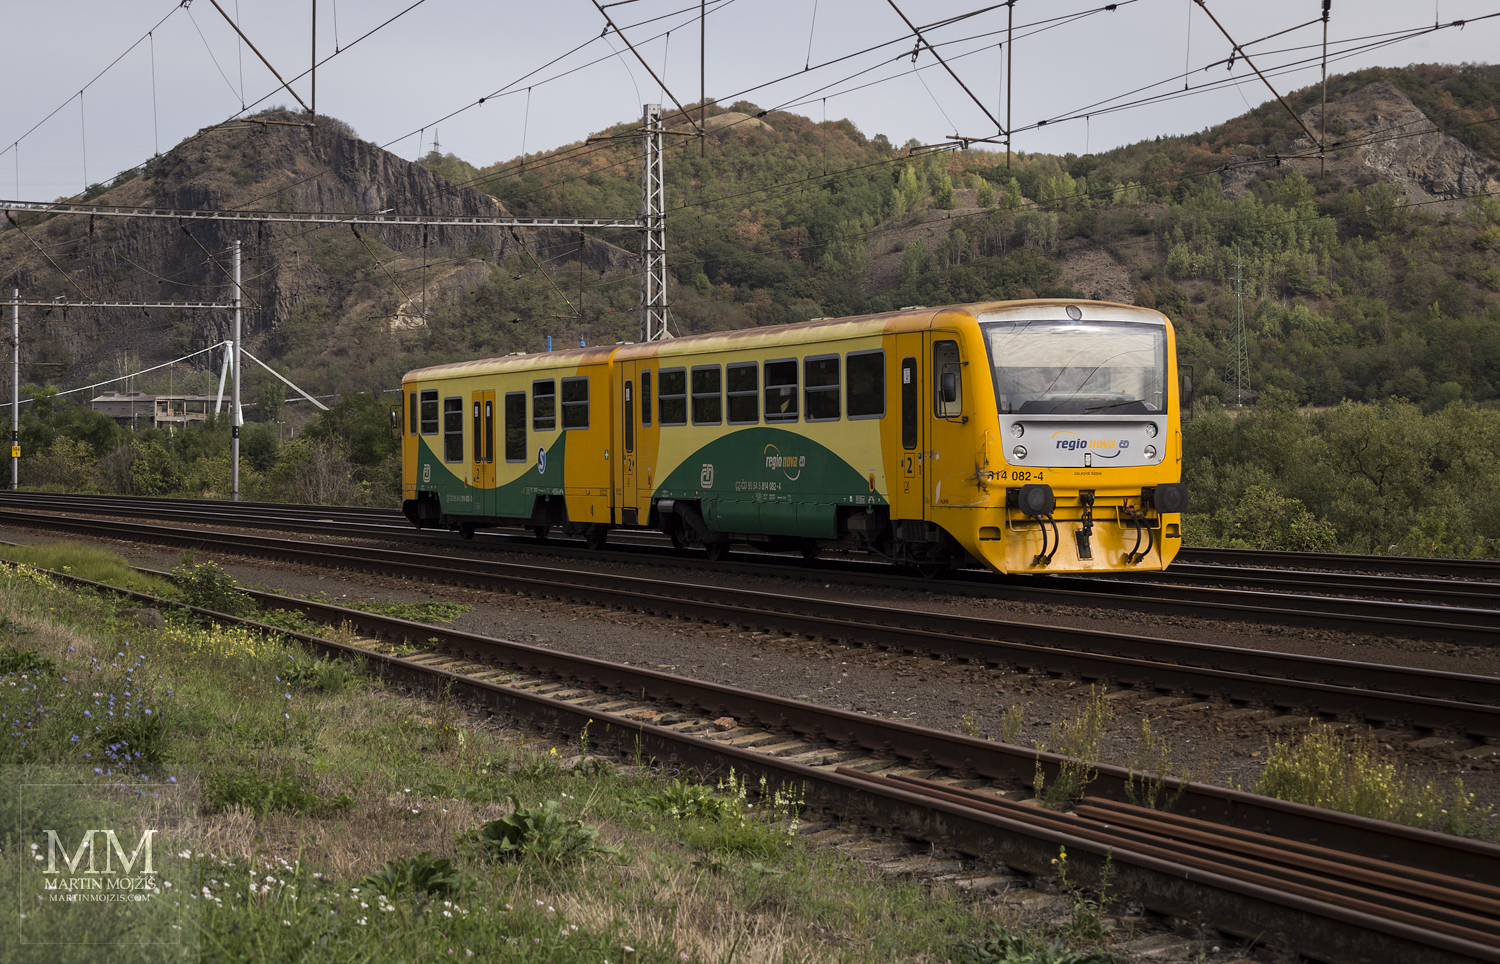 Engine train 814 082-4 Regionova České dráhy. Photographic wanderings.